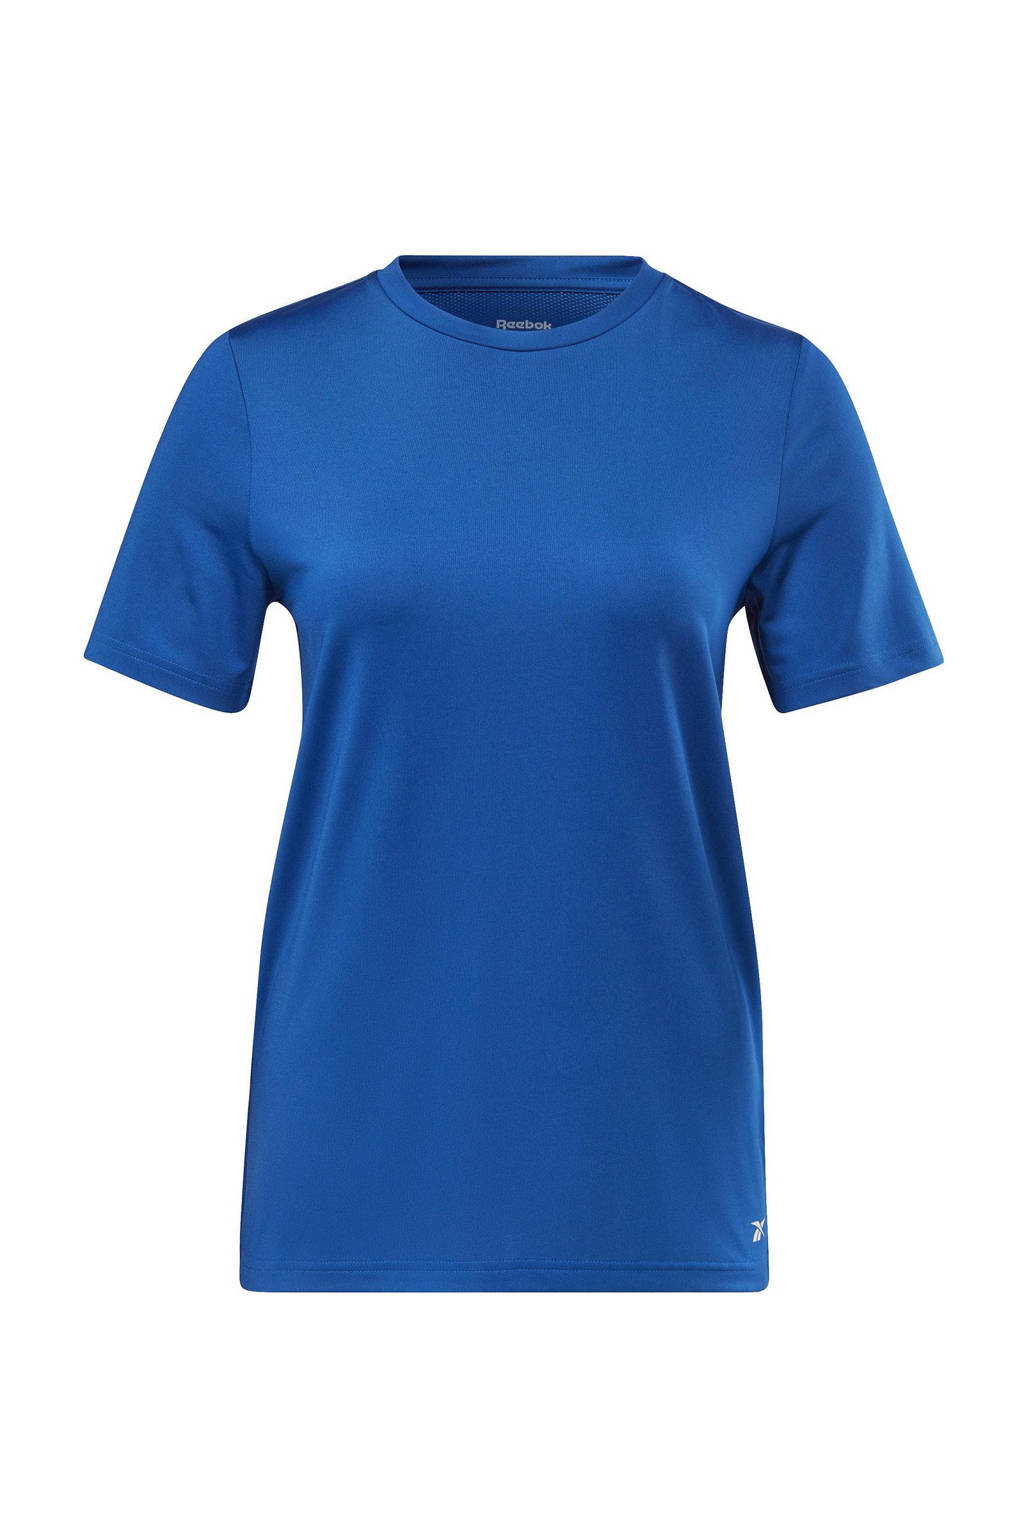 Reebok Training sport T-shirt blauw